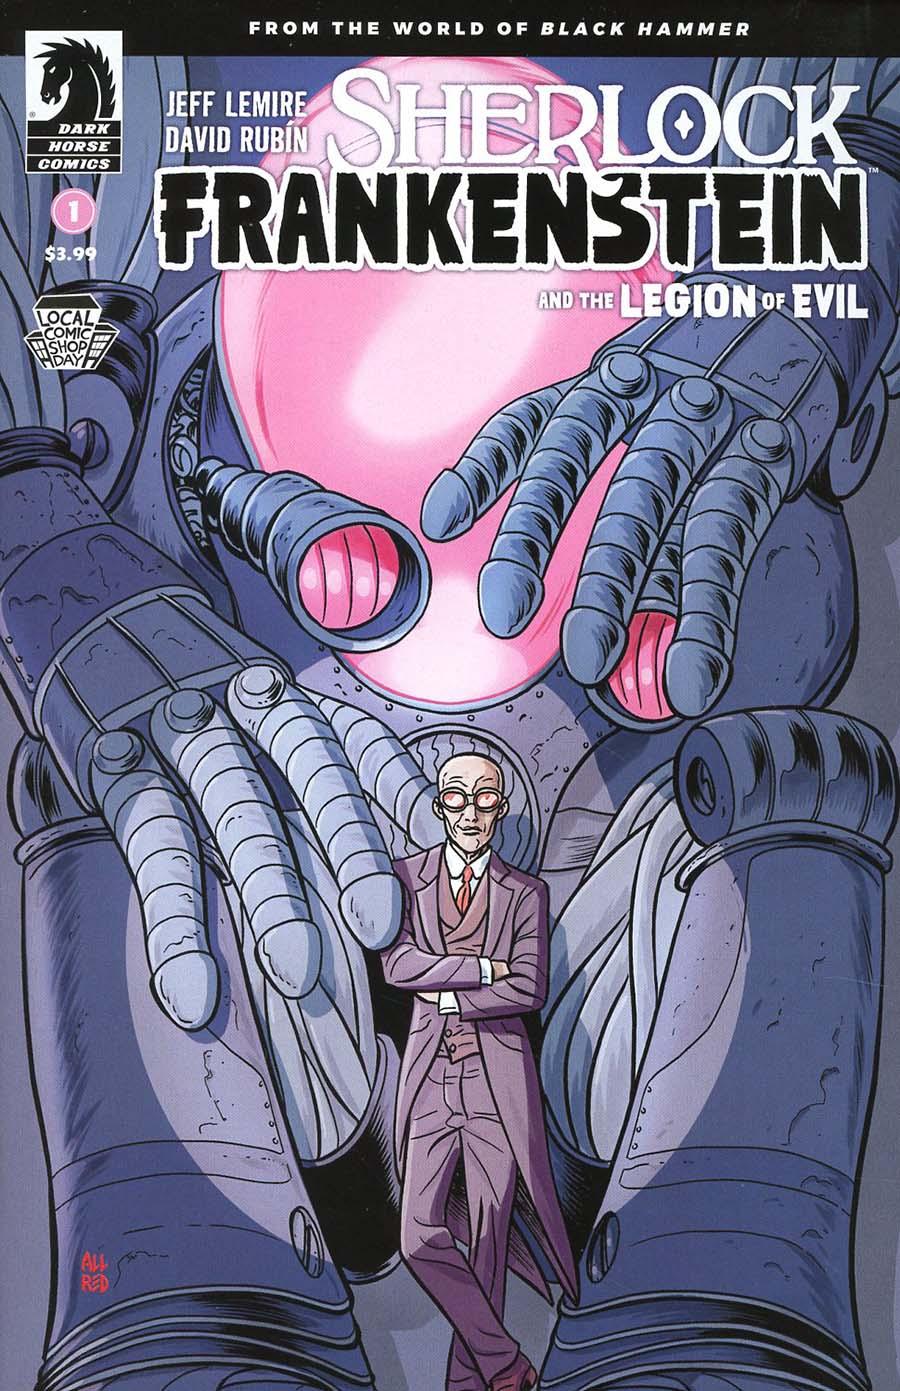 LCSD 2017 Sherlock Frankenstein And The Legion Of Evil Vol. 1 #1